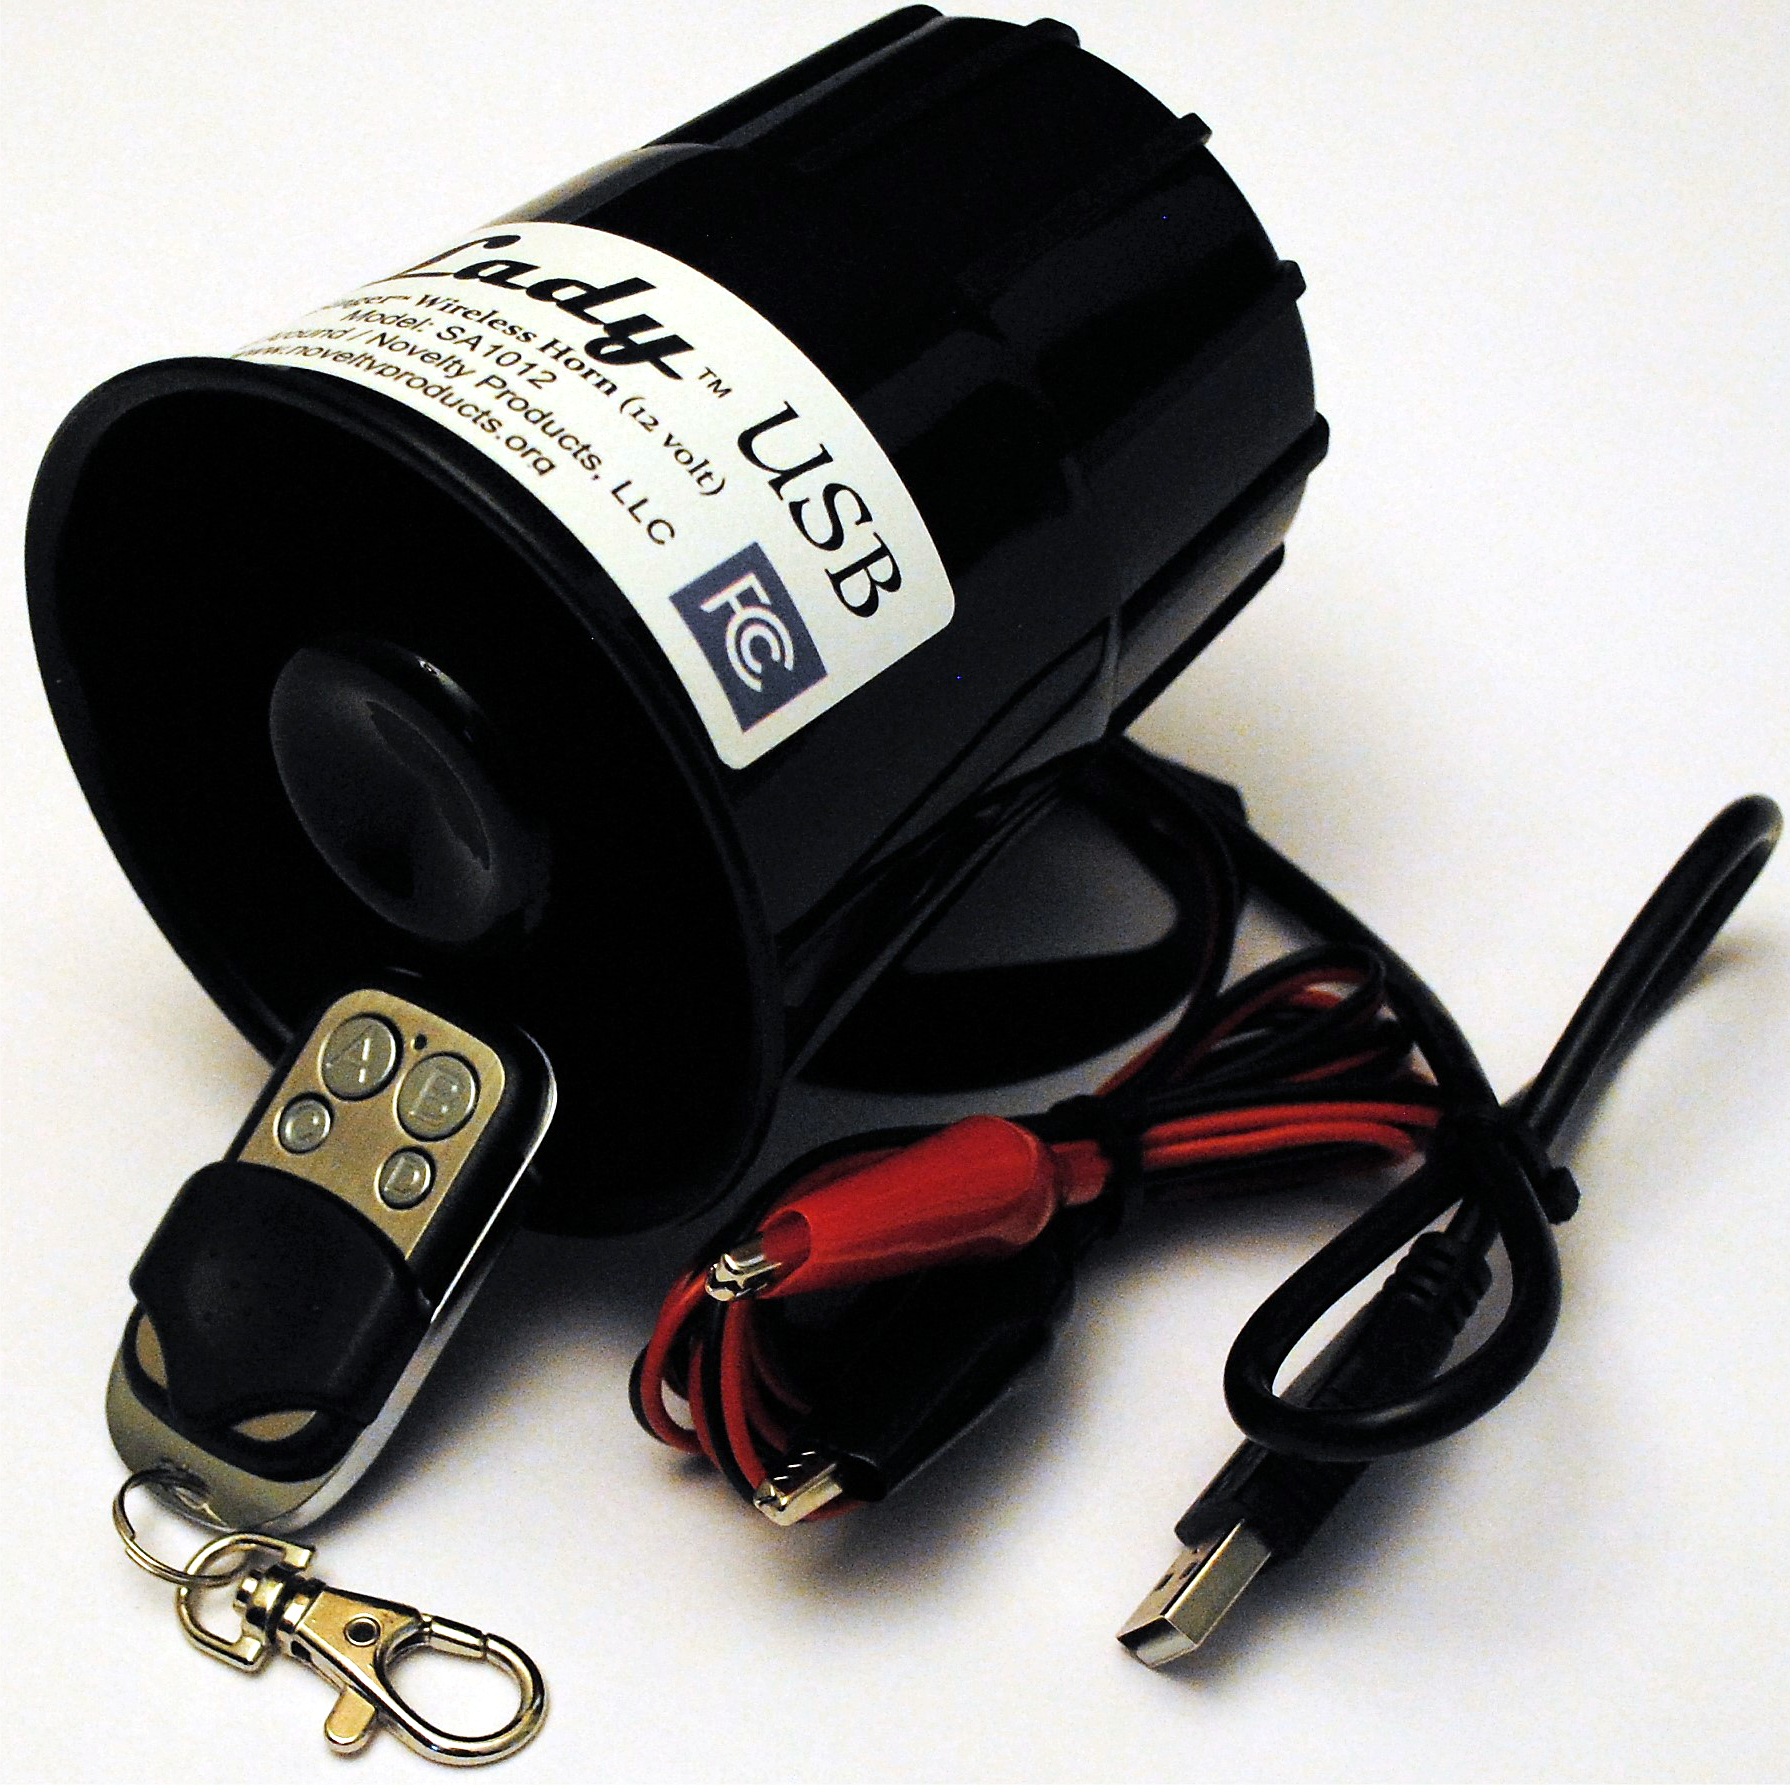 United States Naval Academy USB Car Horn with Wireless KeyFOB Remote